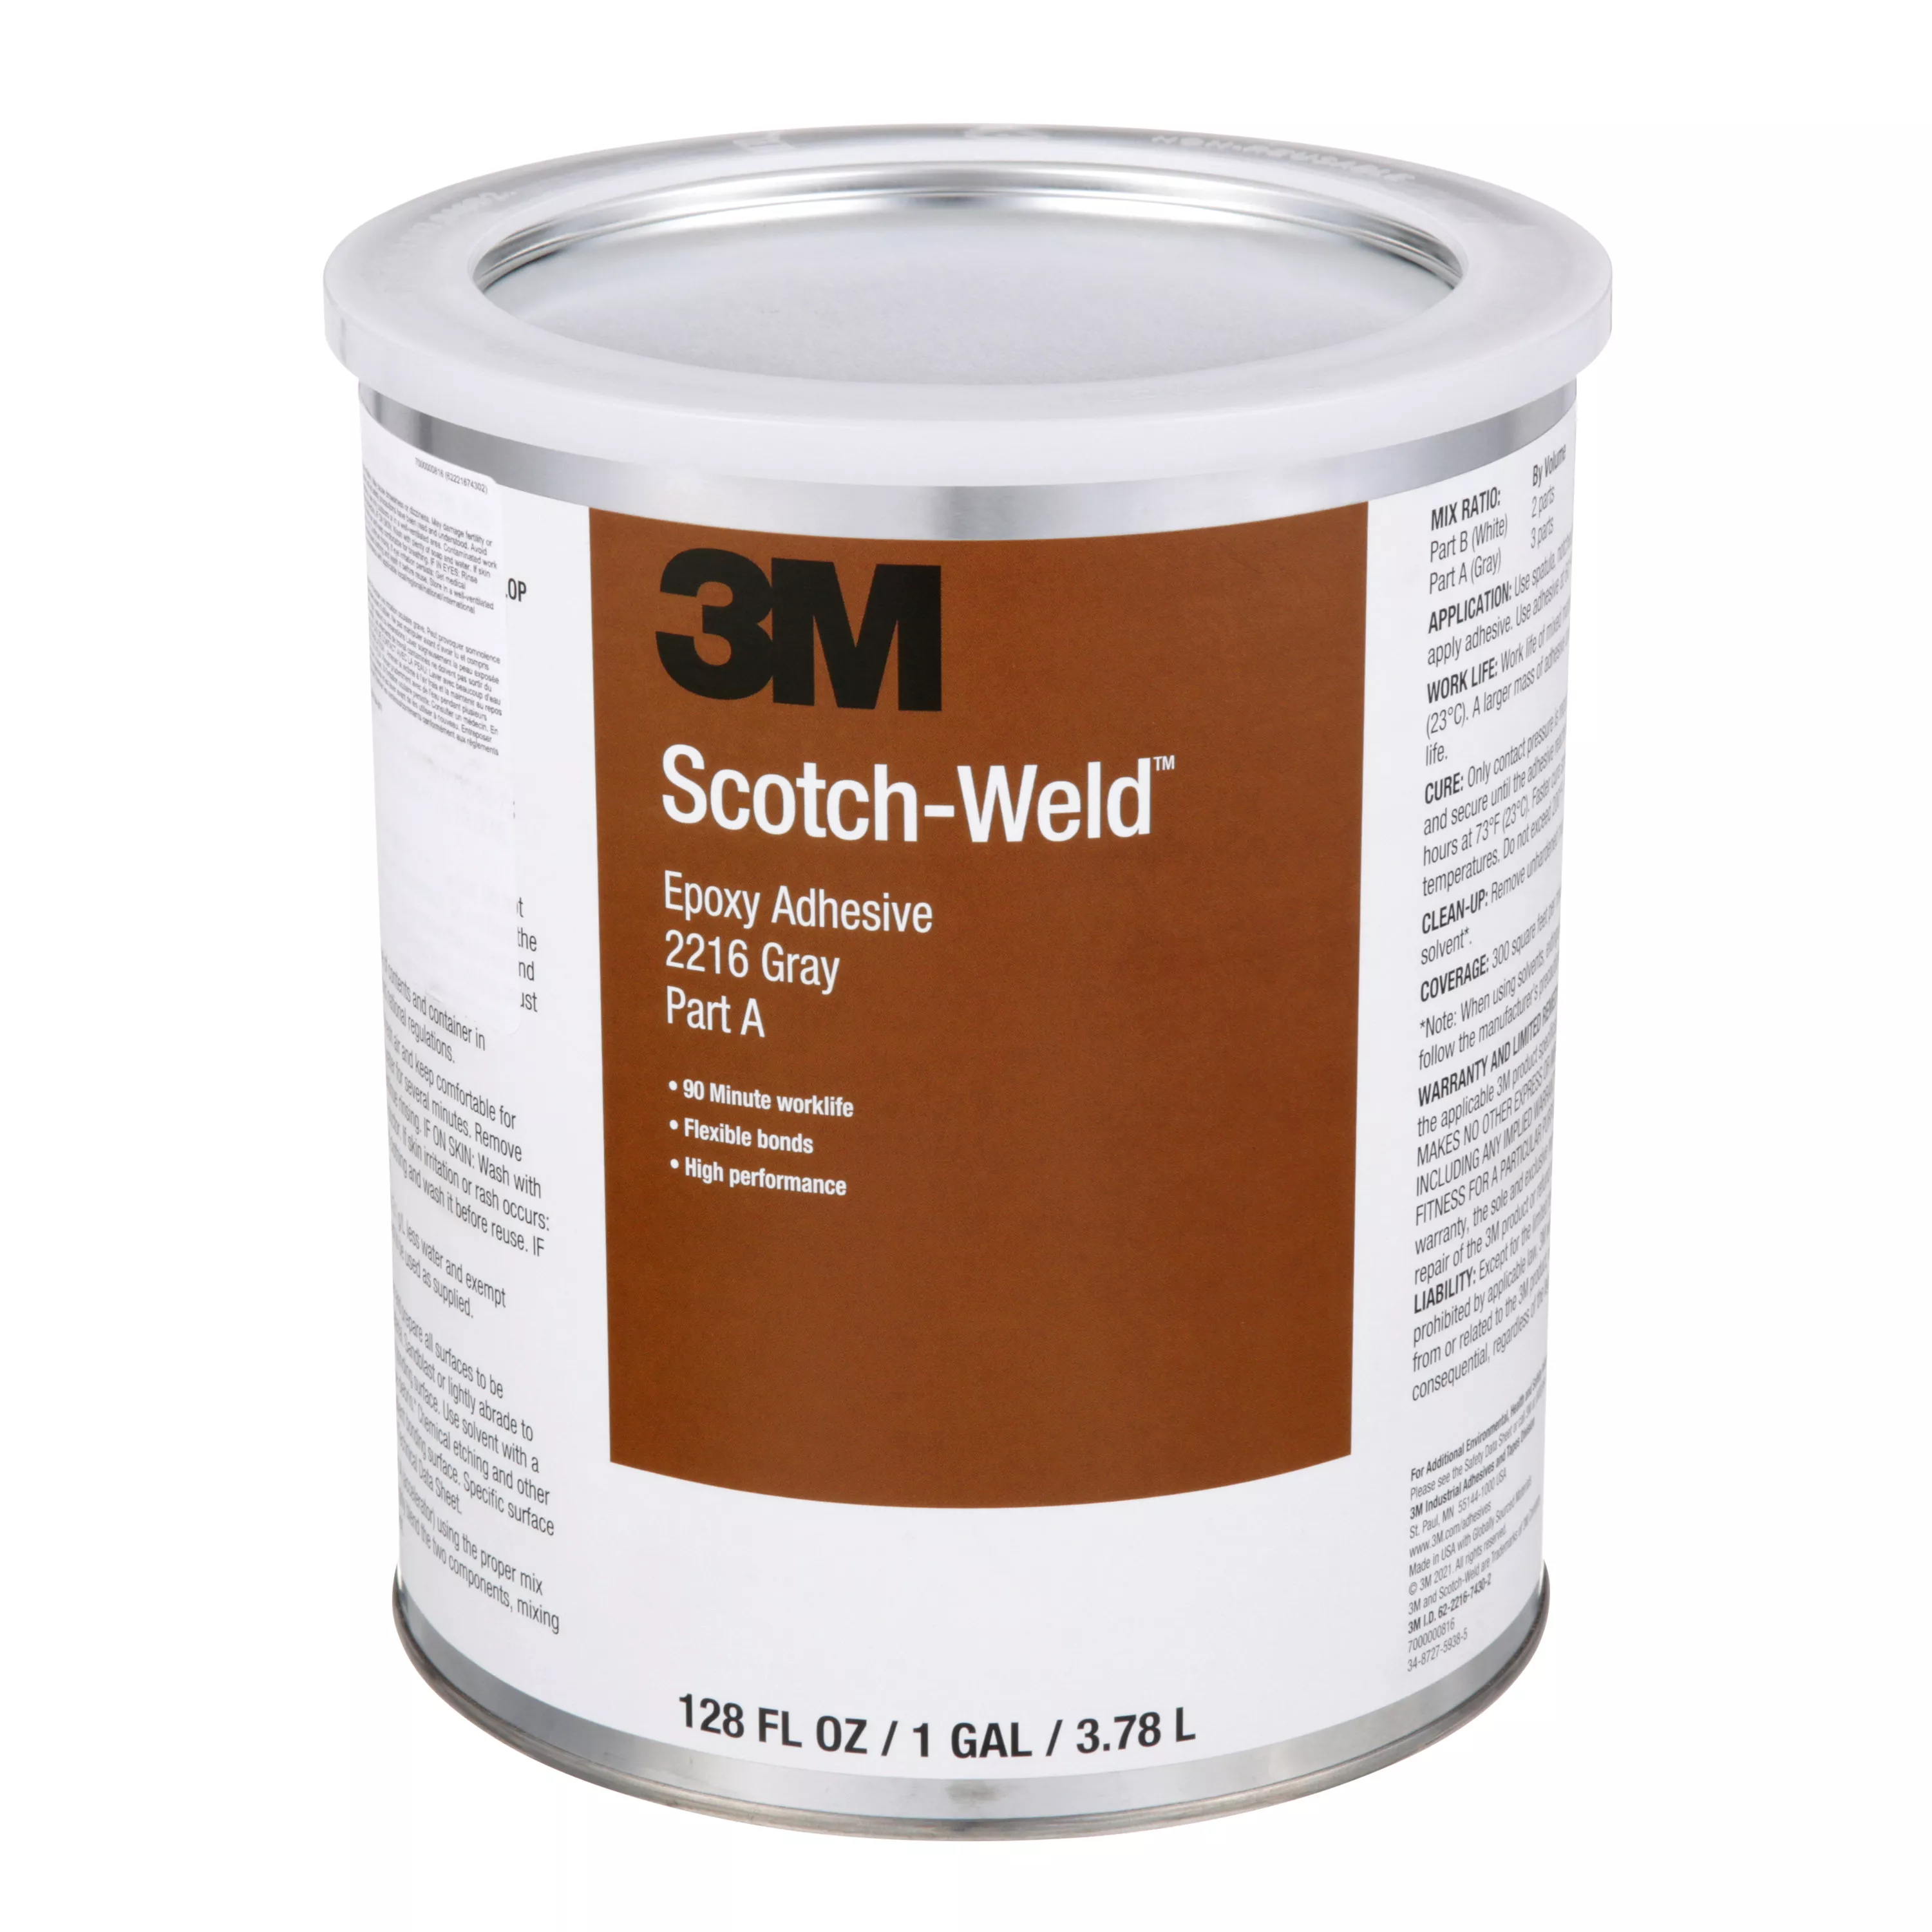 3M™ Scotch-Weld™ Epoxy Adhesive 2216, Gray, Part B/A, 1.66 Gallon, 2 Kit/Case